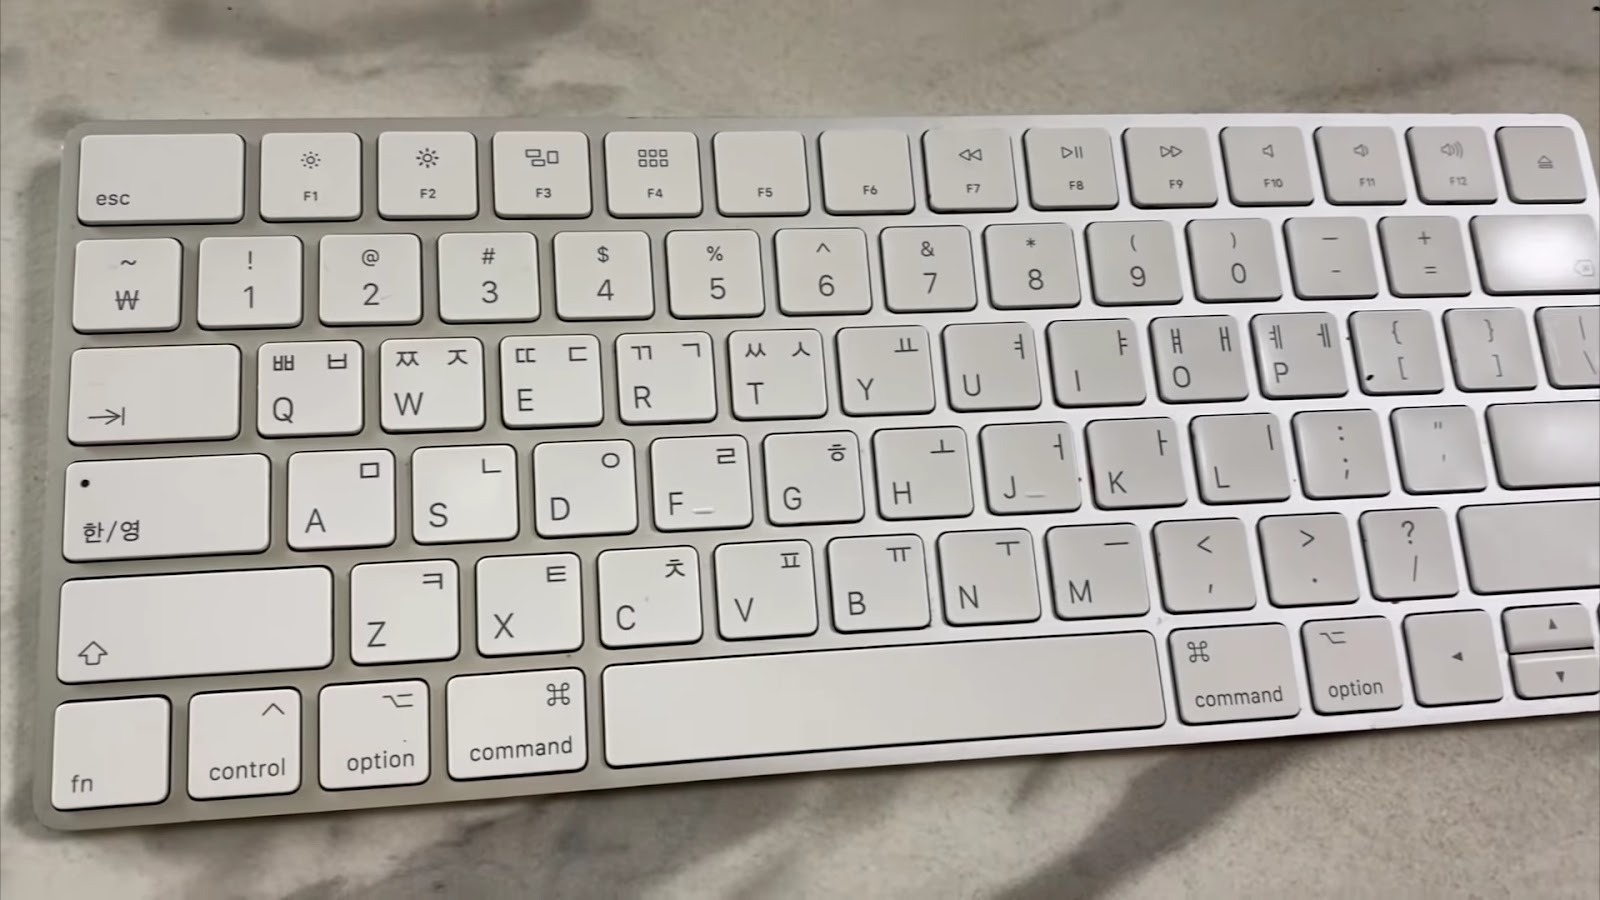 Top view of korean keyboard layout